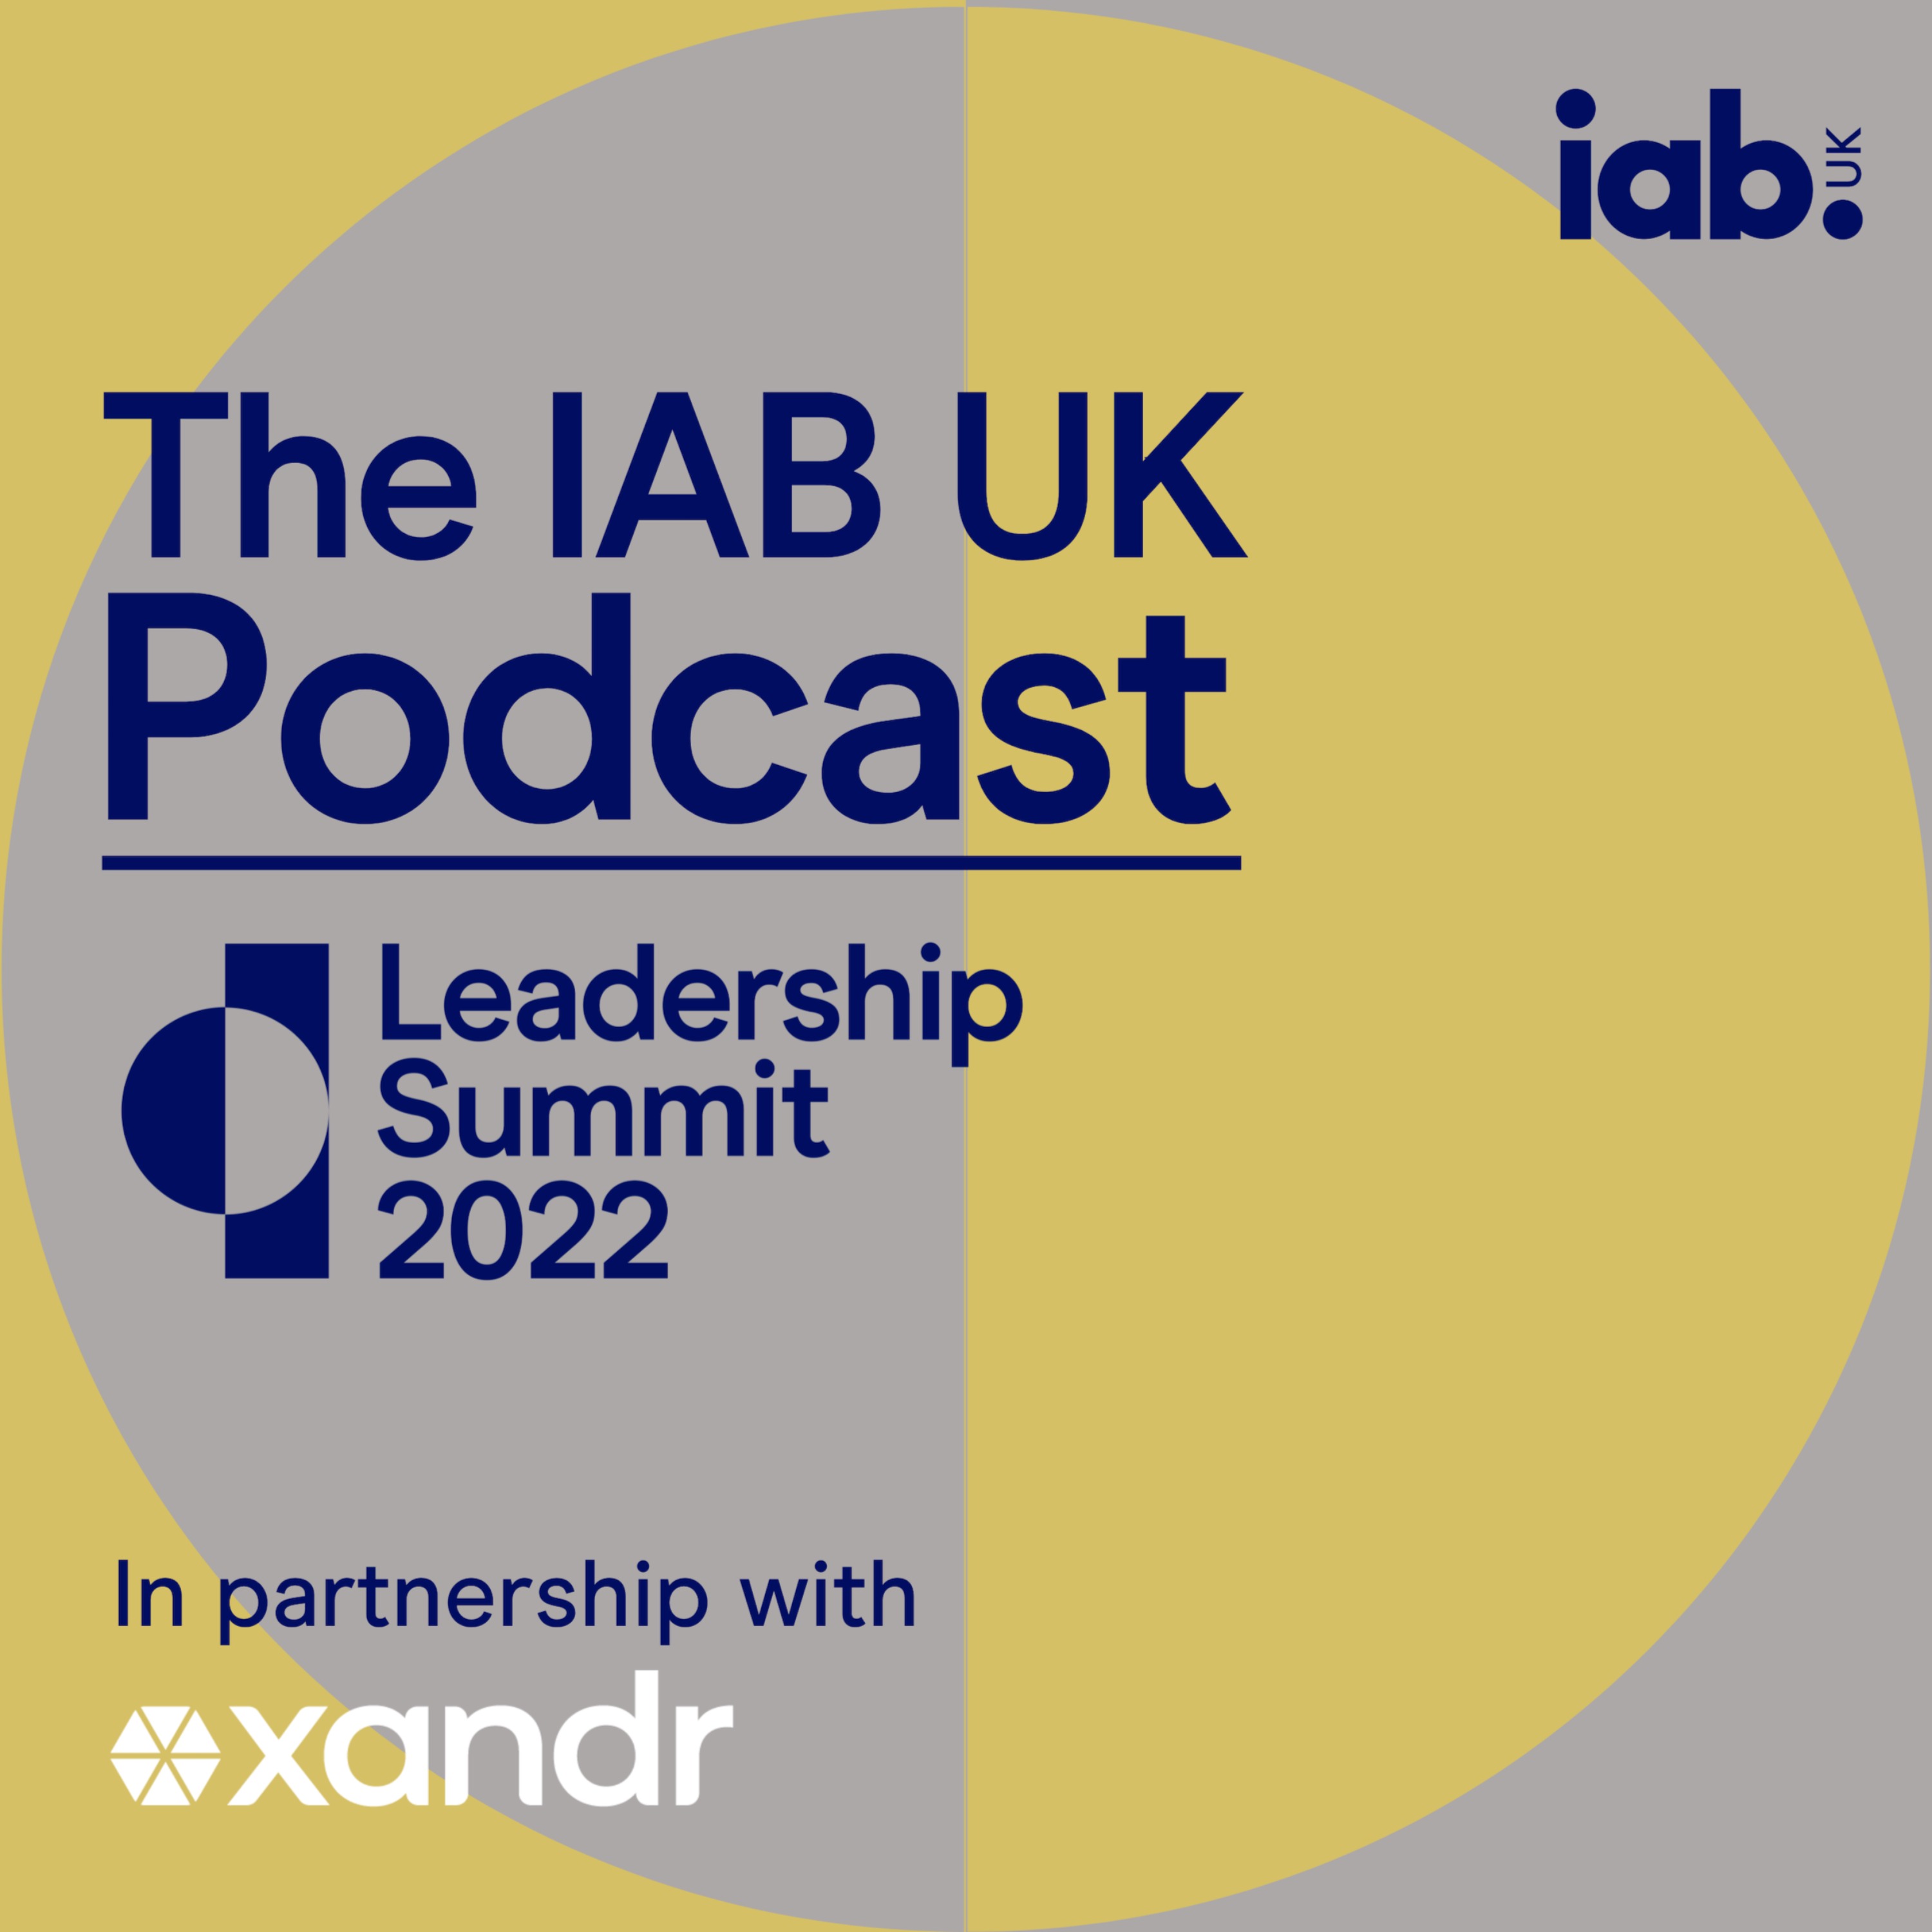 IAB UK Leadership Summit 2022 Special The IAB UK Podcast Lyssna här